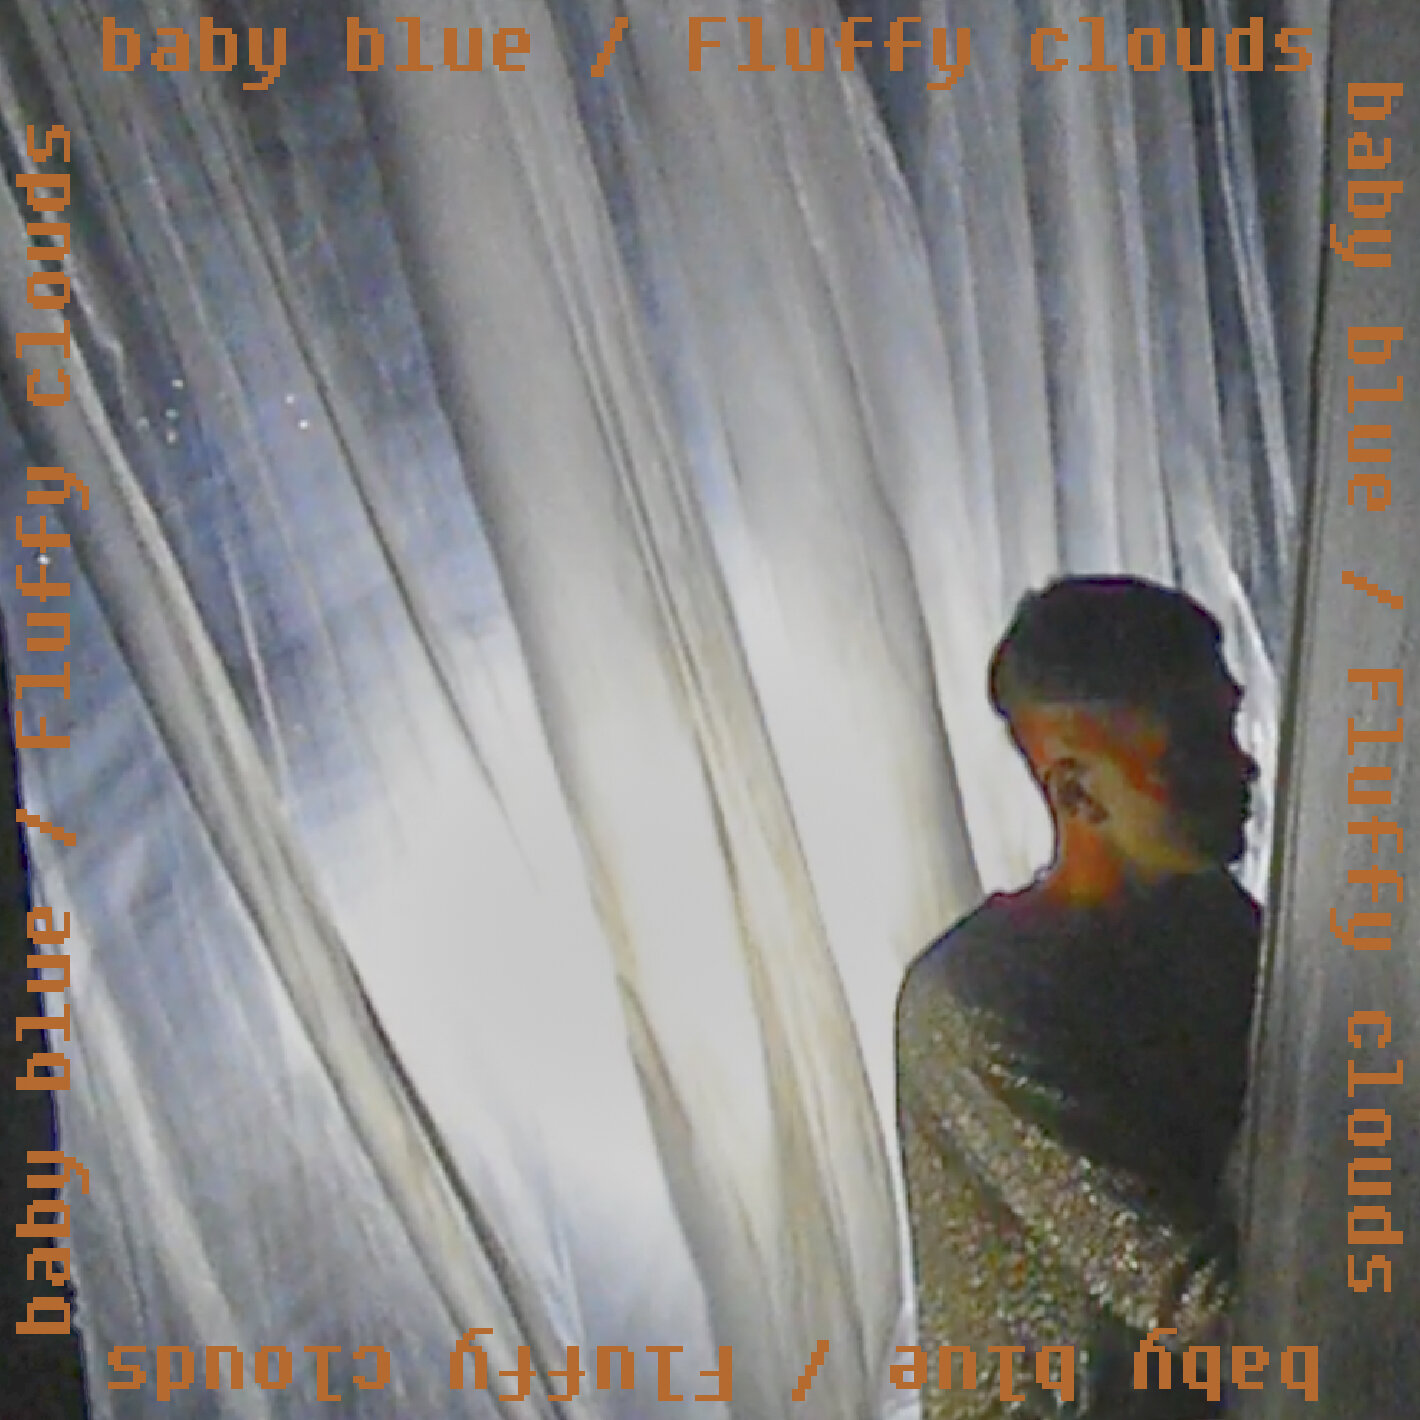 Lokoy - Baby blue/Fluffy clouds